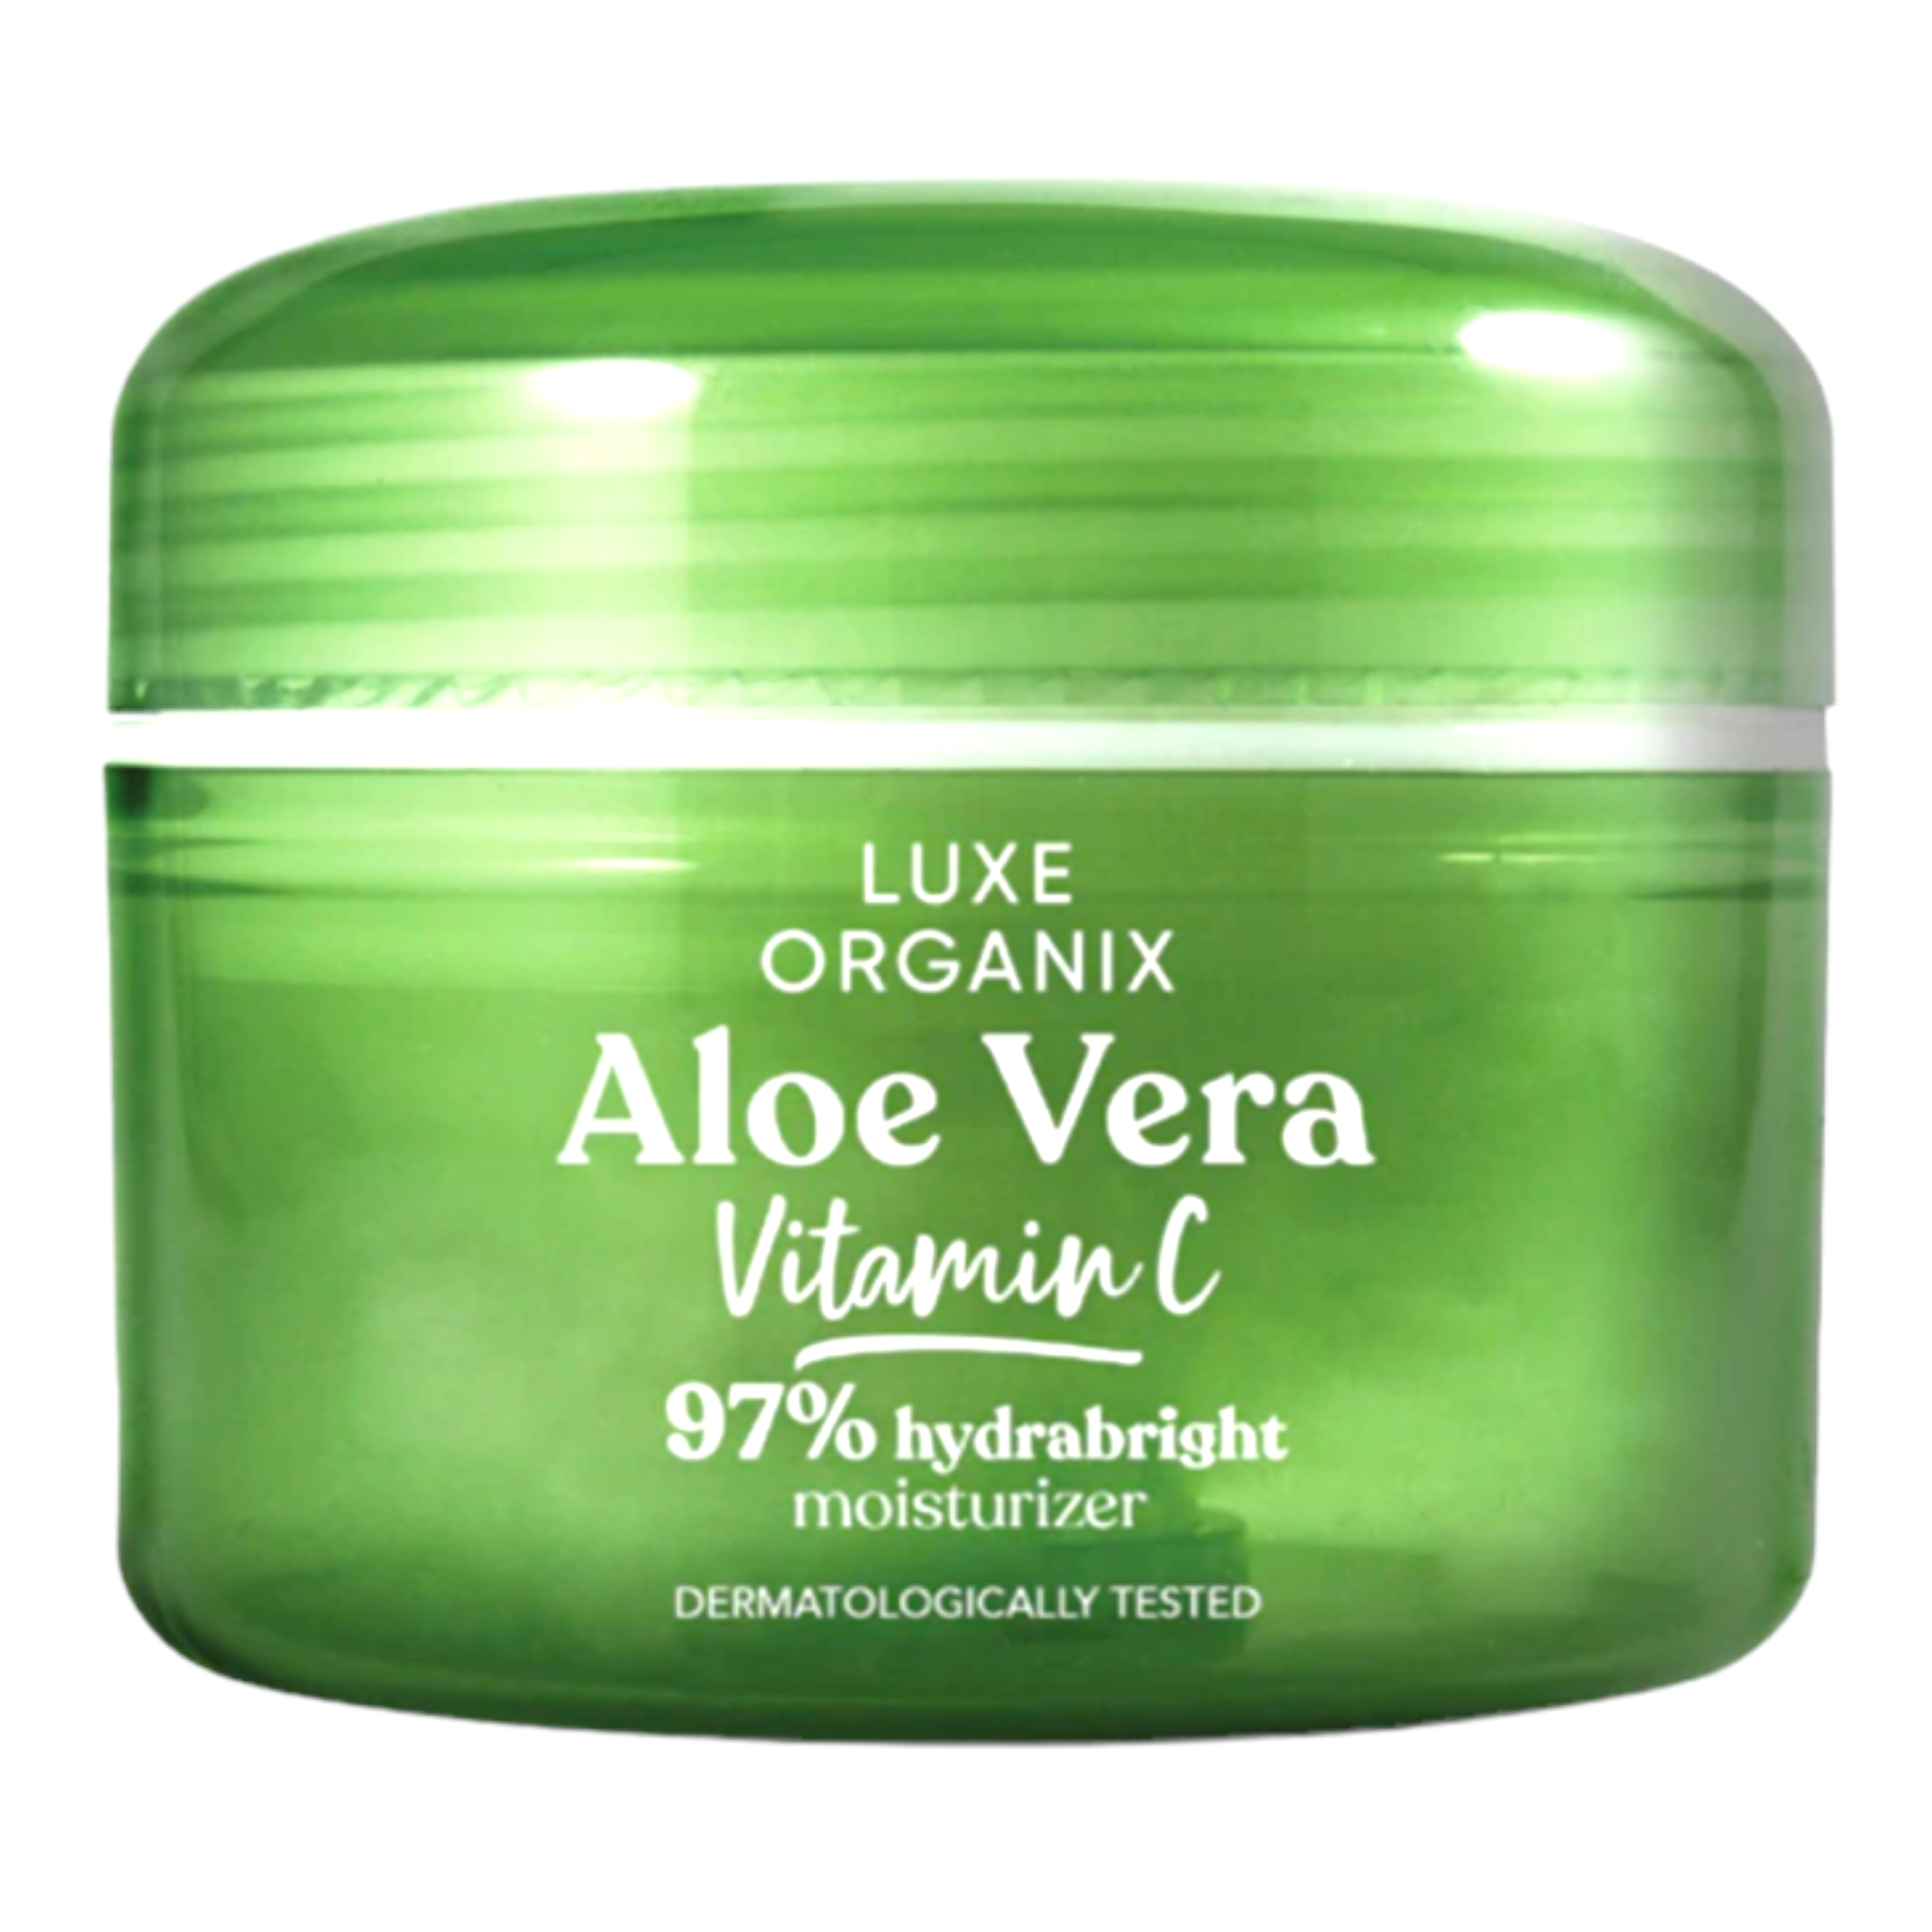 Luxe Organix - Aloe Vera Vitamin C 97% Hydrabright Moisturizer - 50g